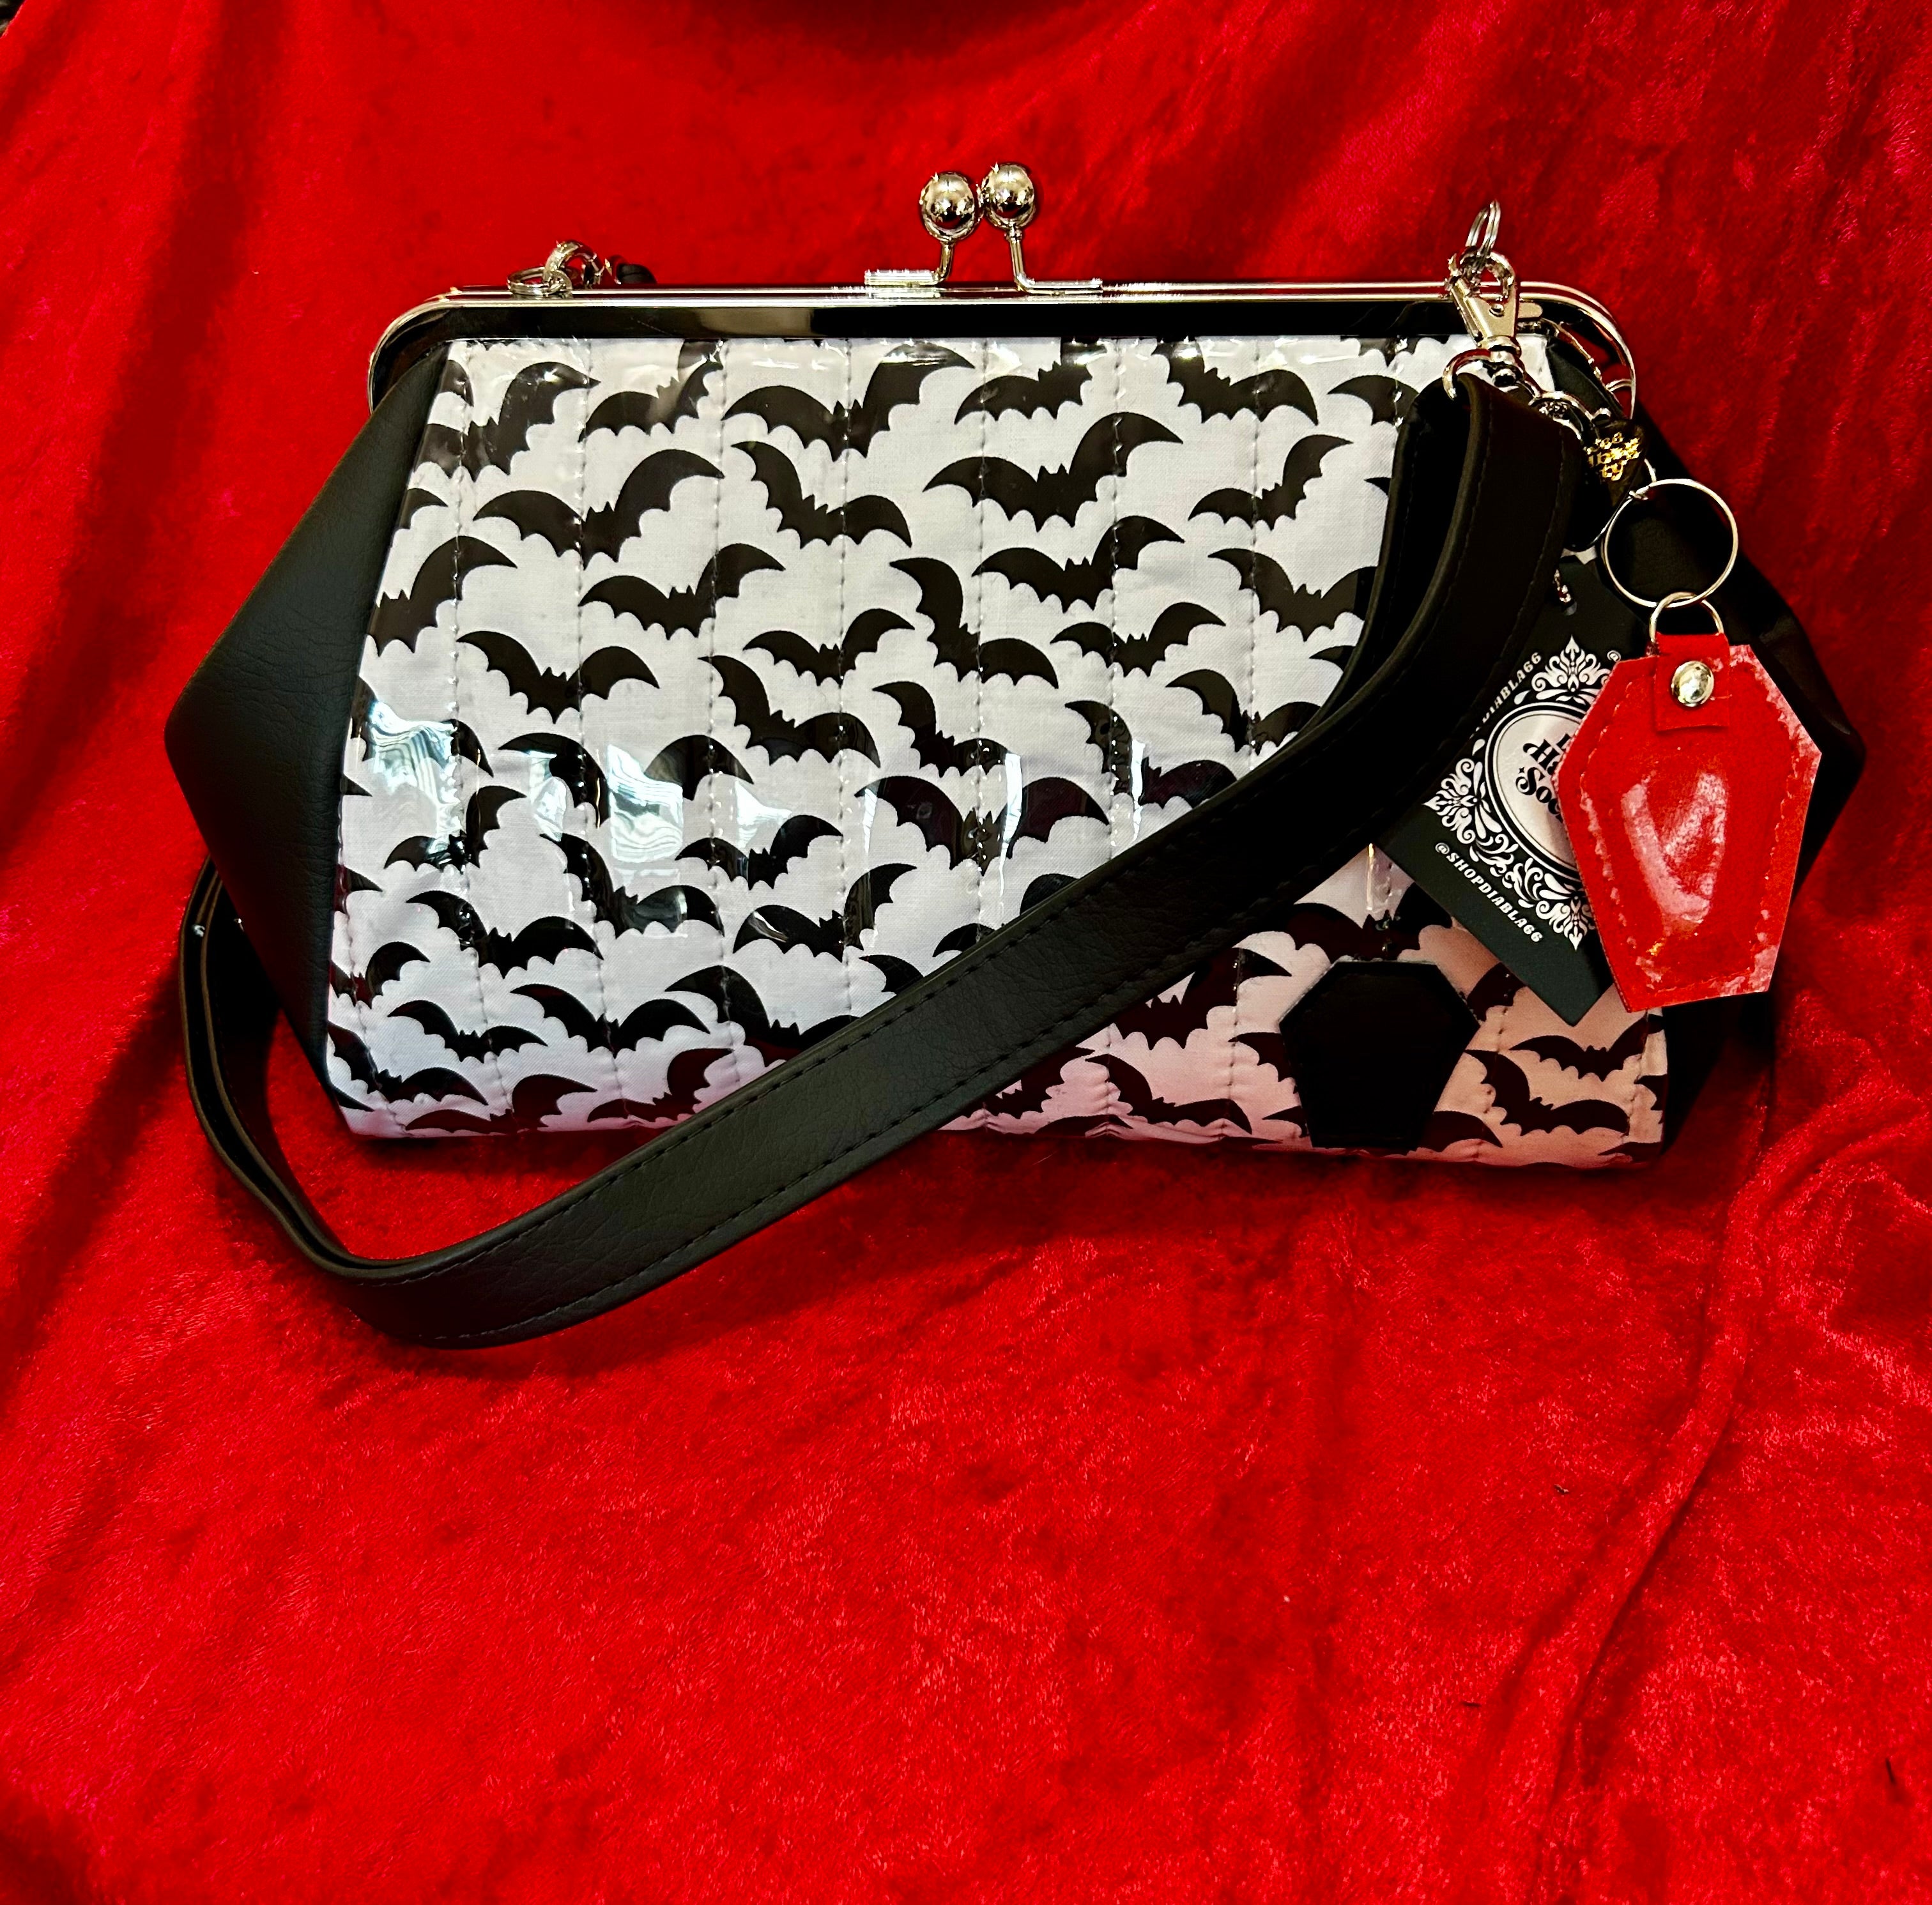 Bettie Page Bags & Handbags for Women for sale | eBay